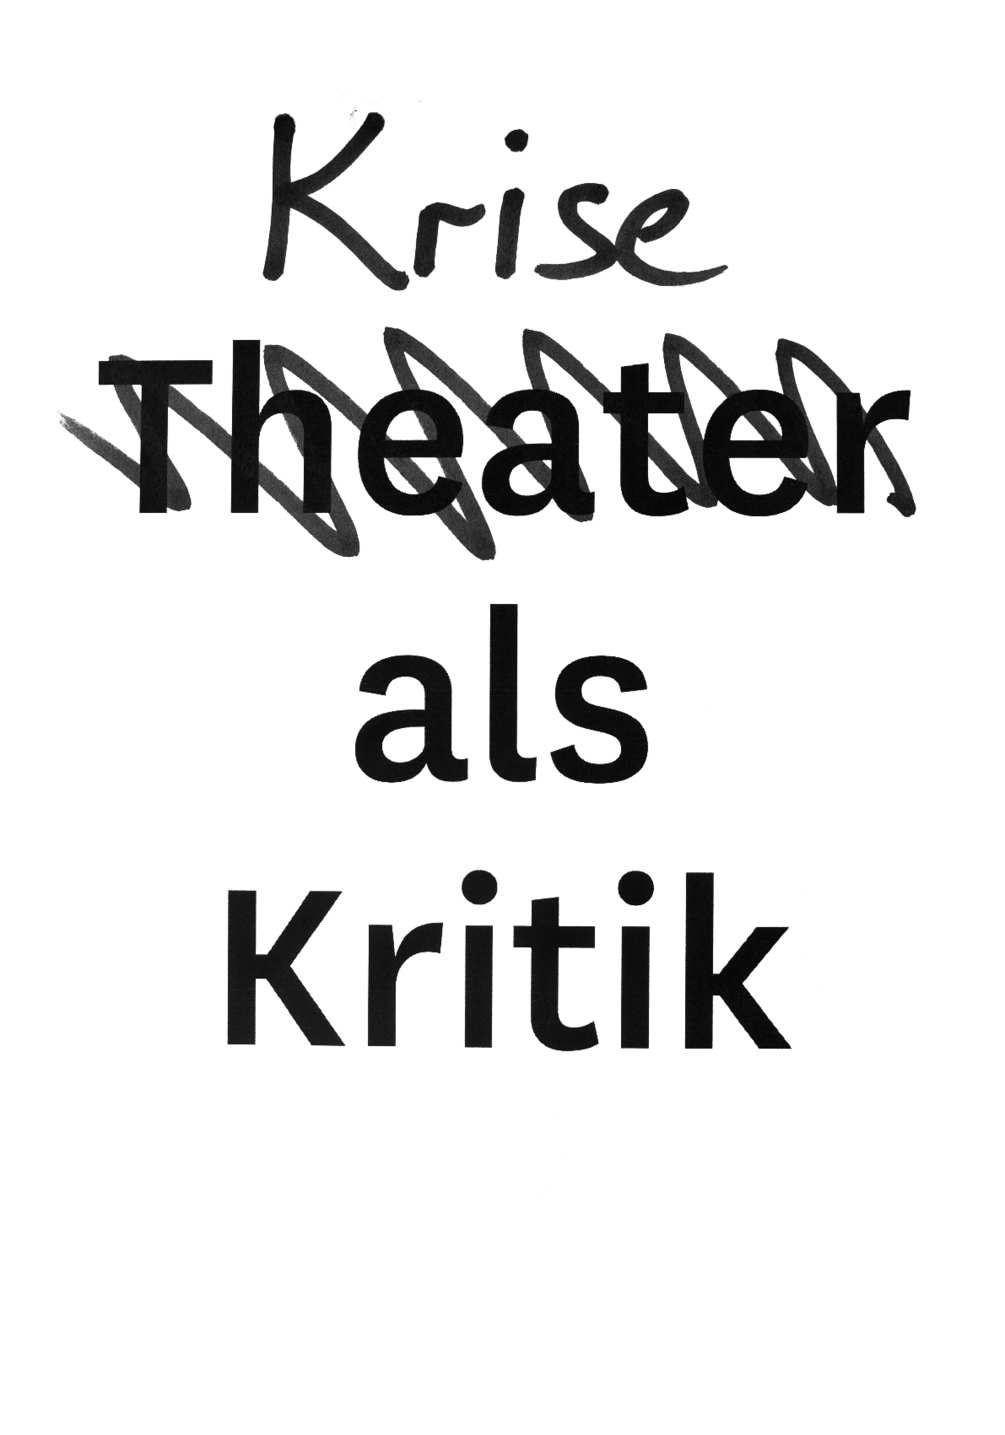 theater-as-critique-slip-28-1005x1435px